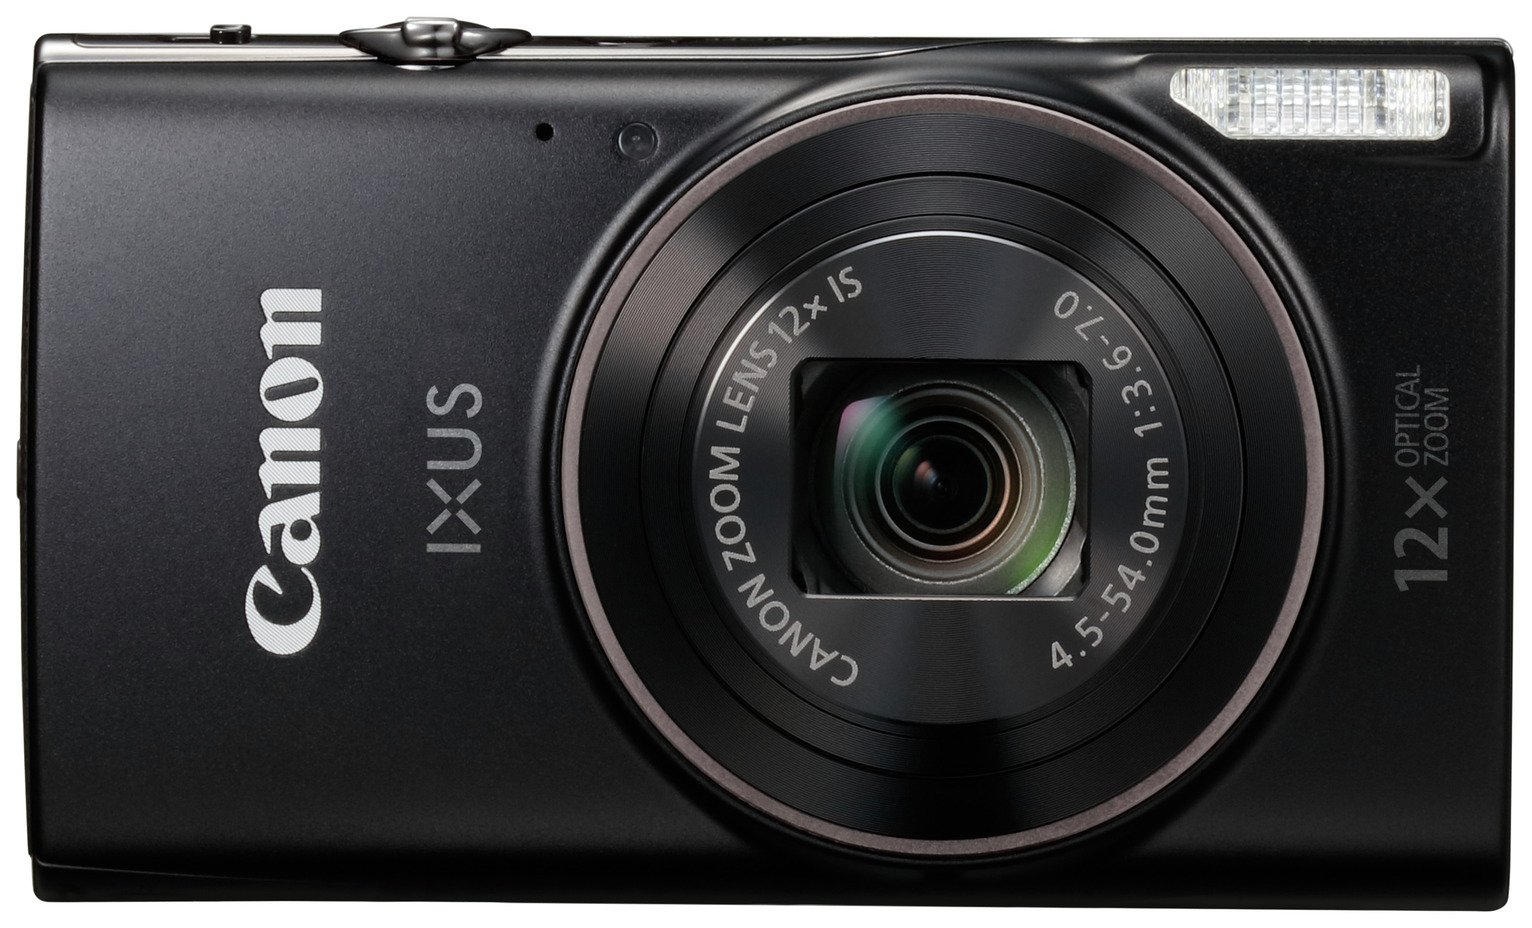 Canon IXUS 285 HS 20.2MP 12x Zoom Compact Digital Camera